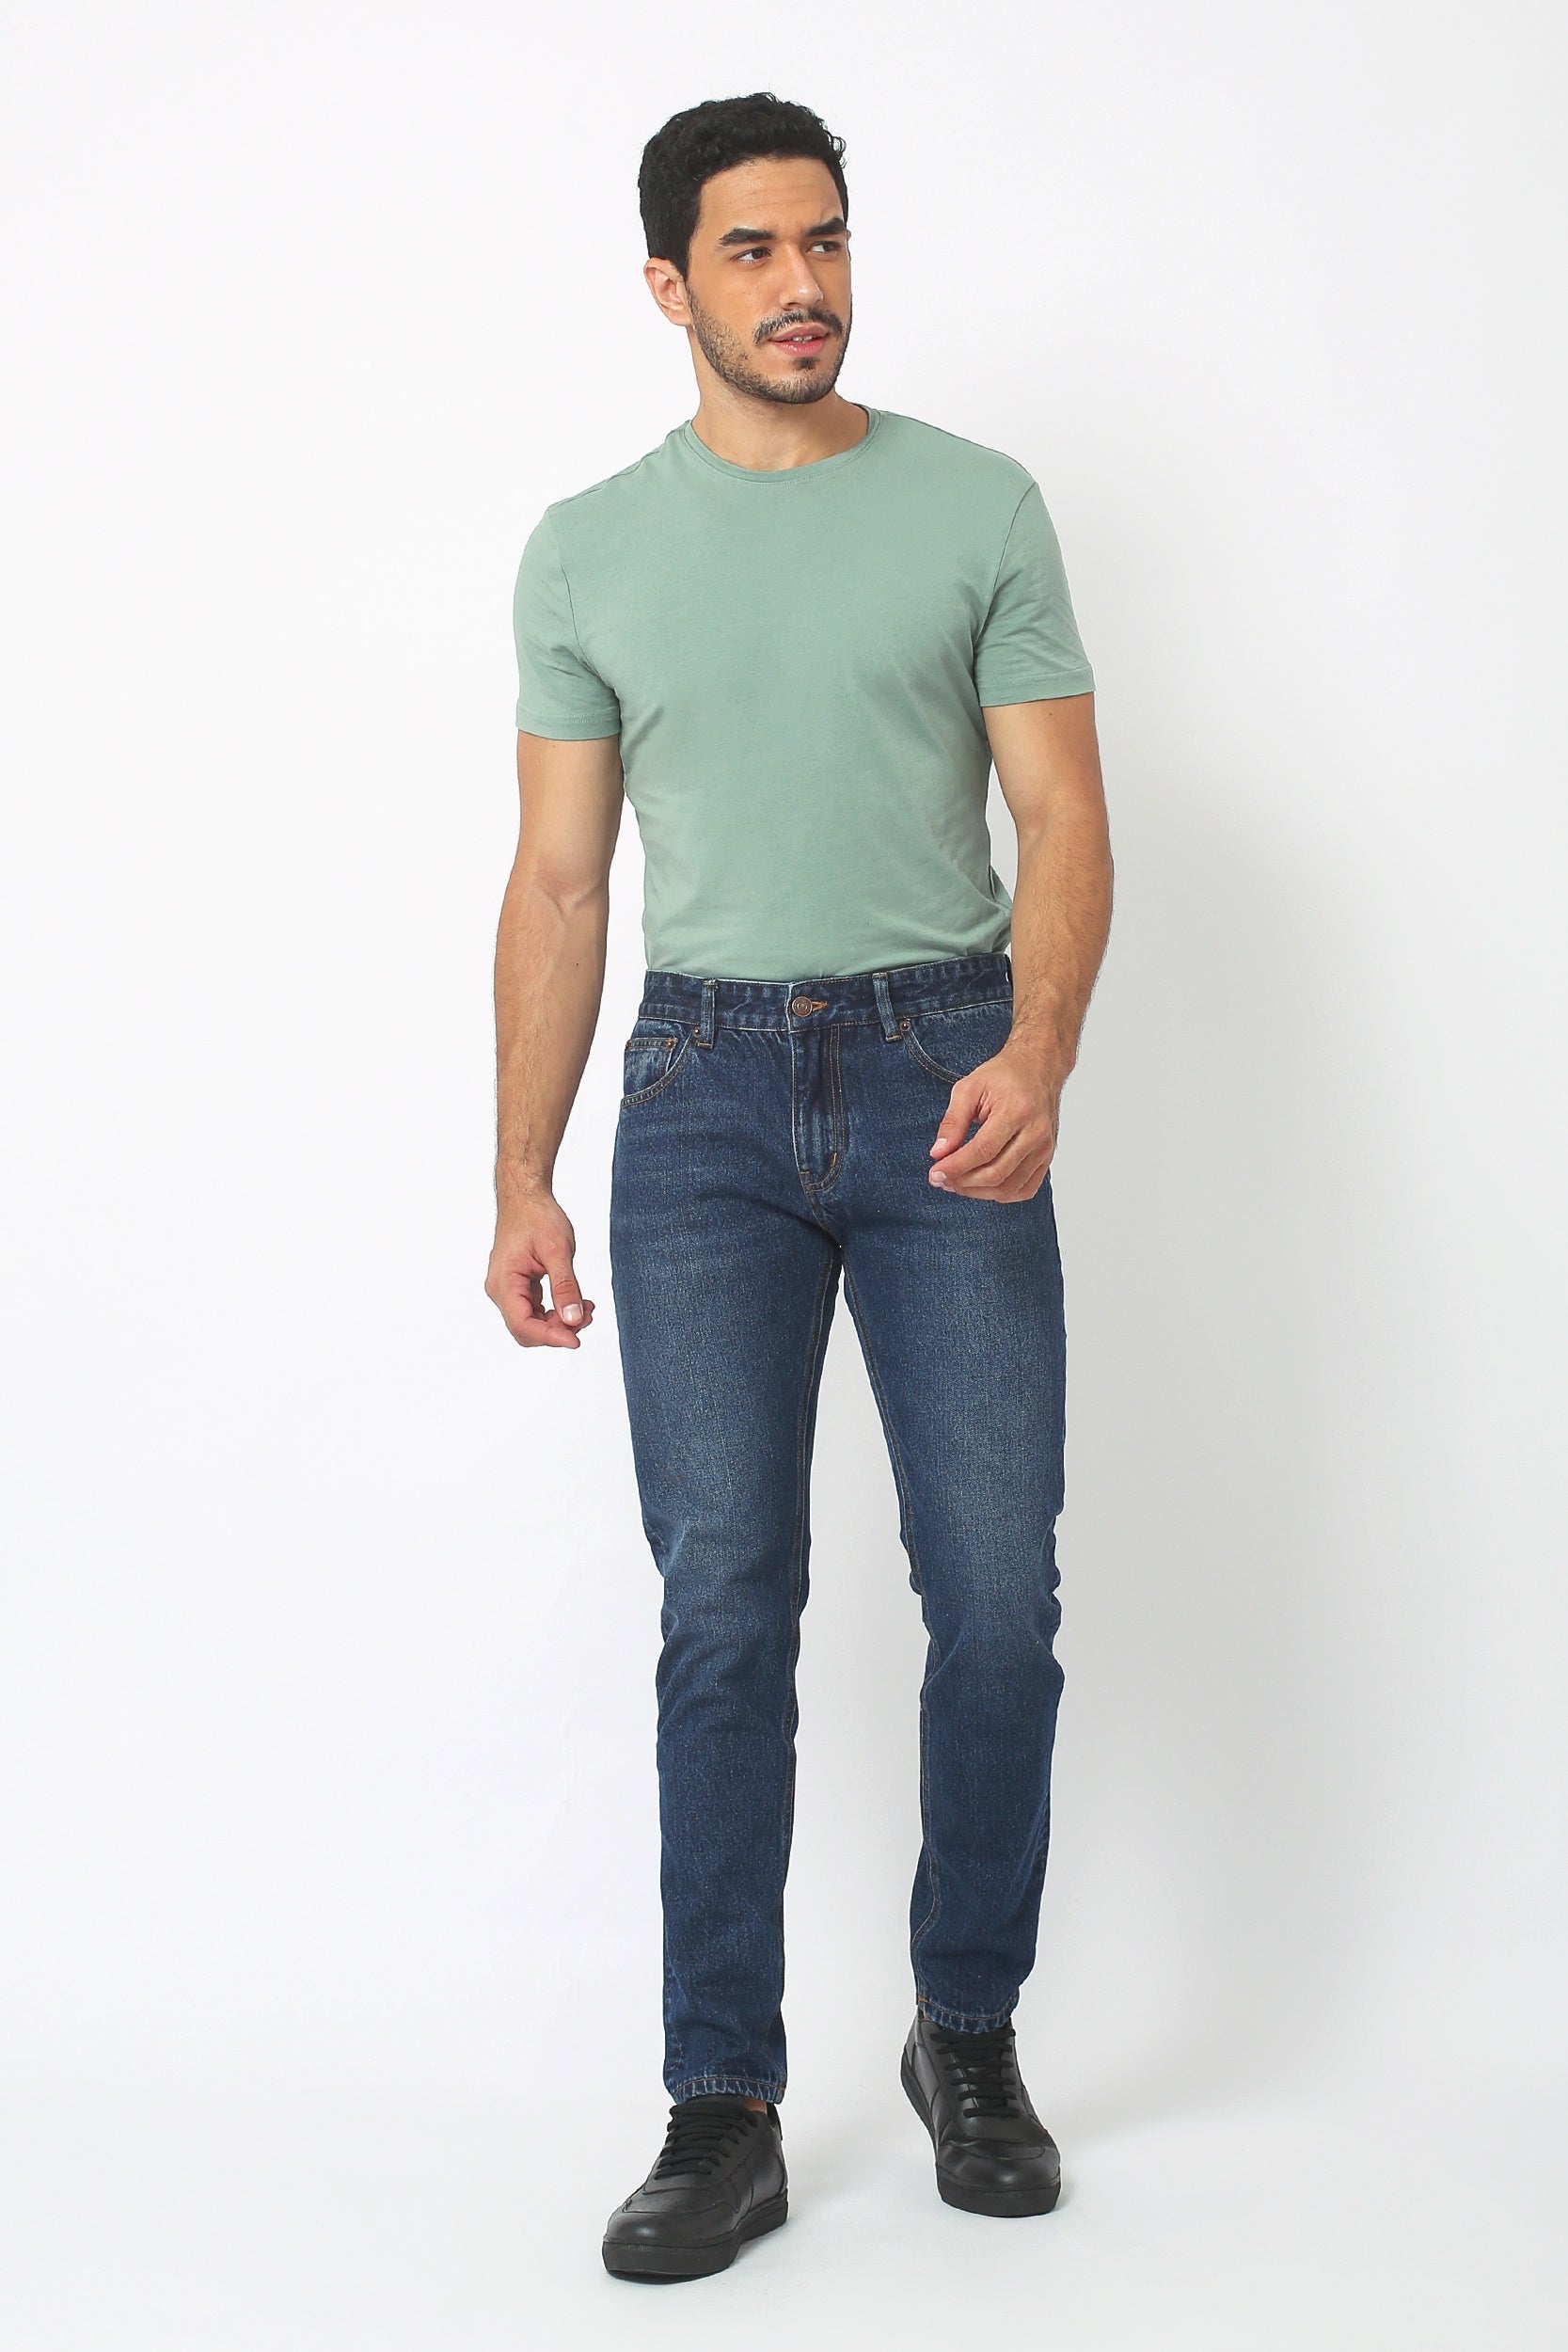 Men Jeans Pictures | Download Free Images on Unsplash